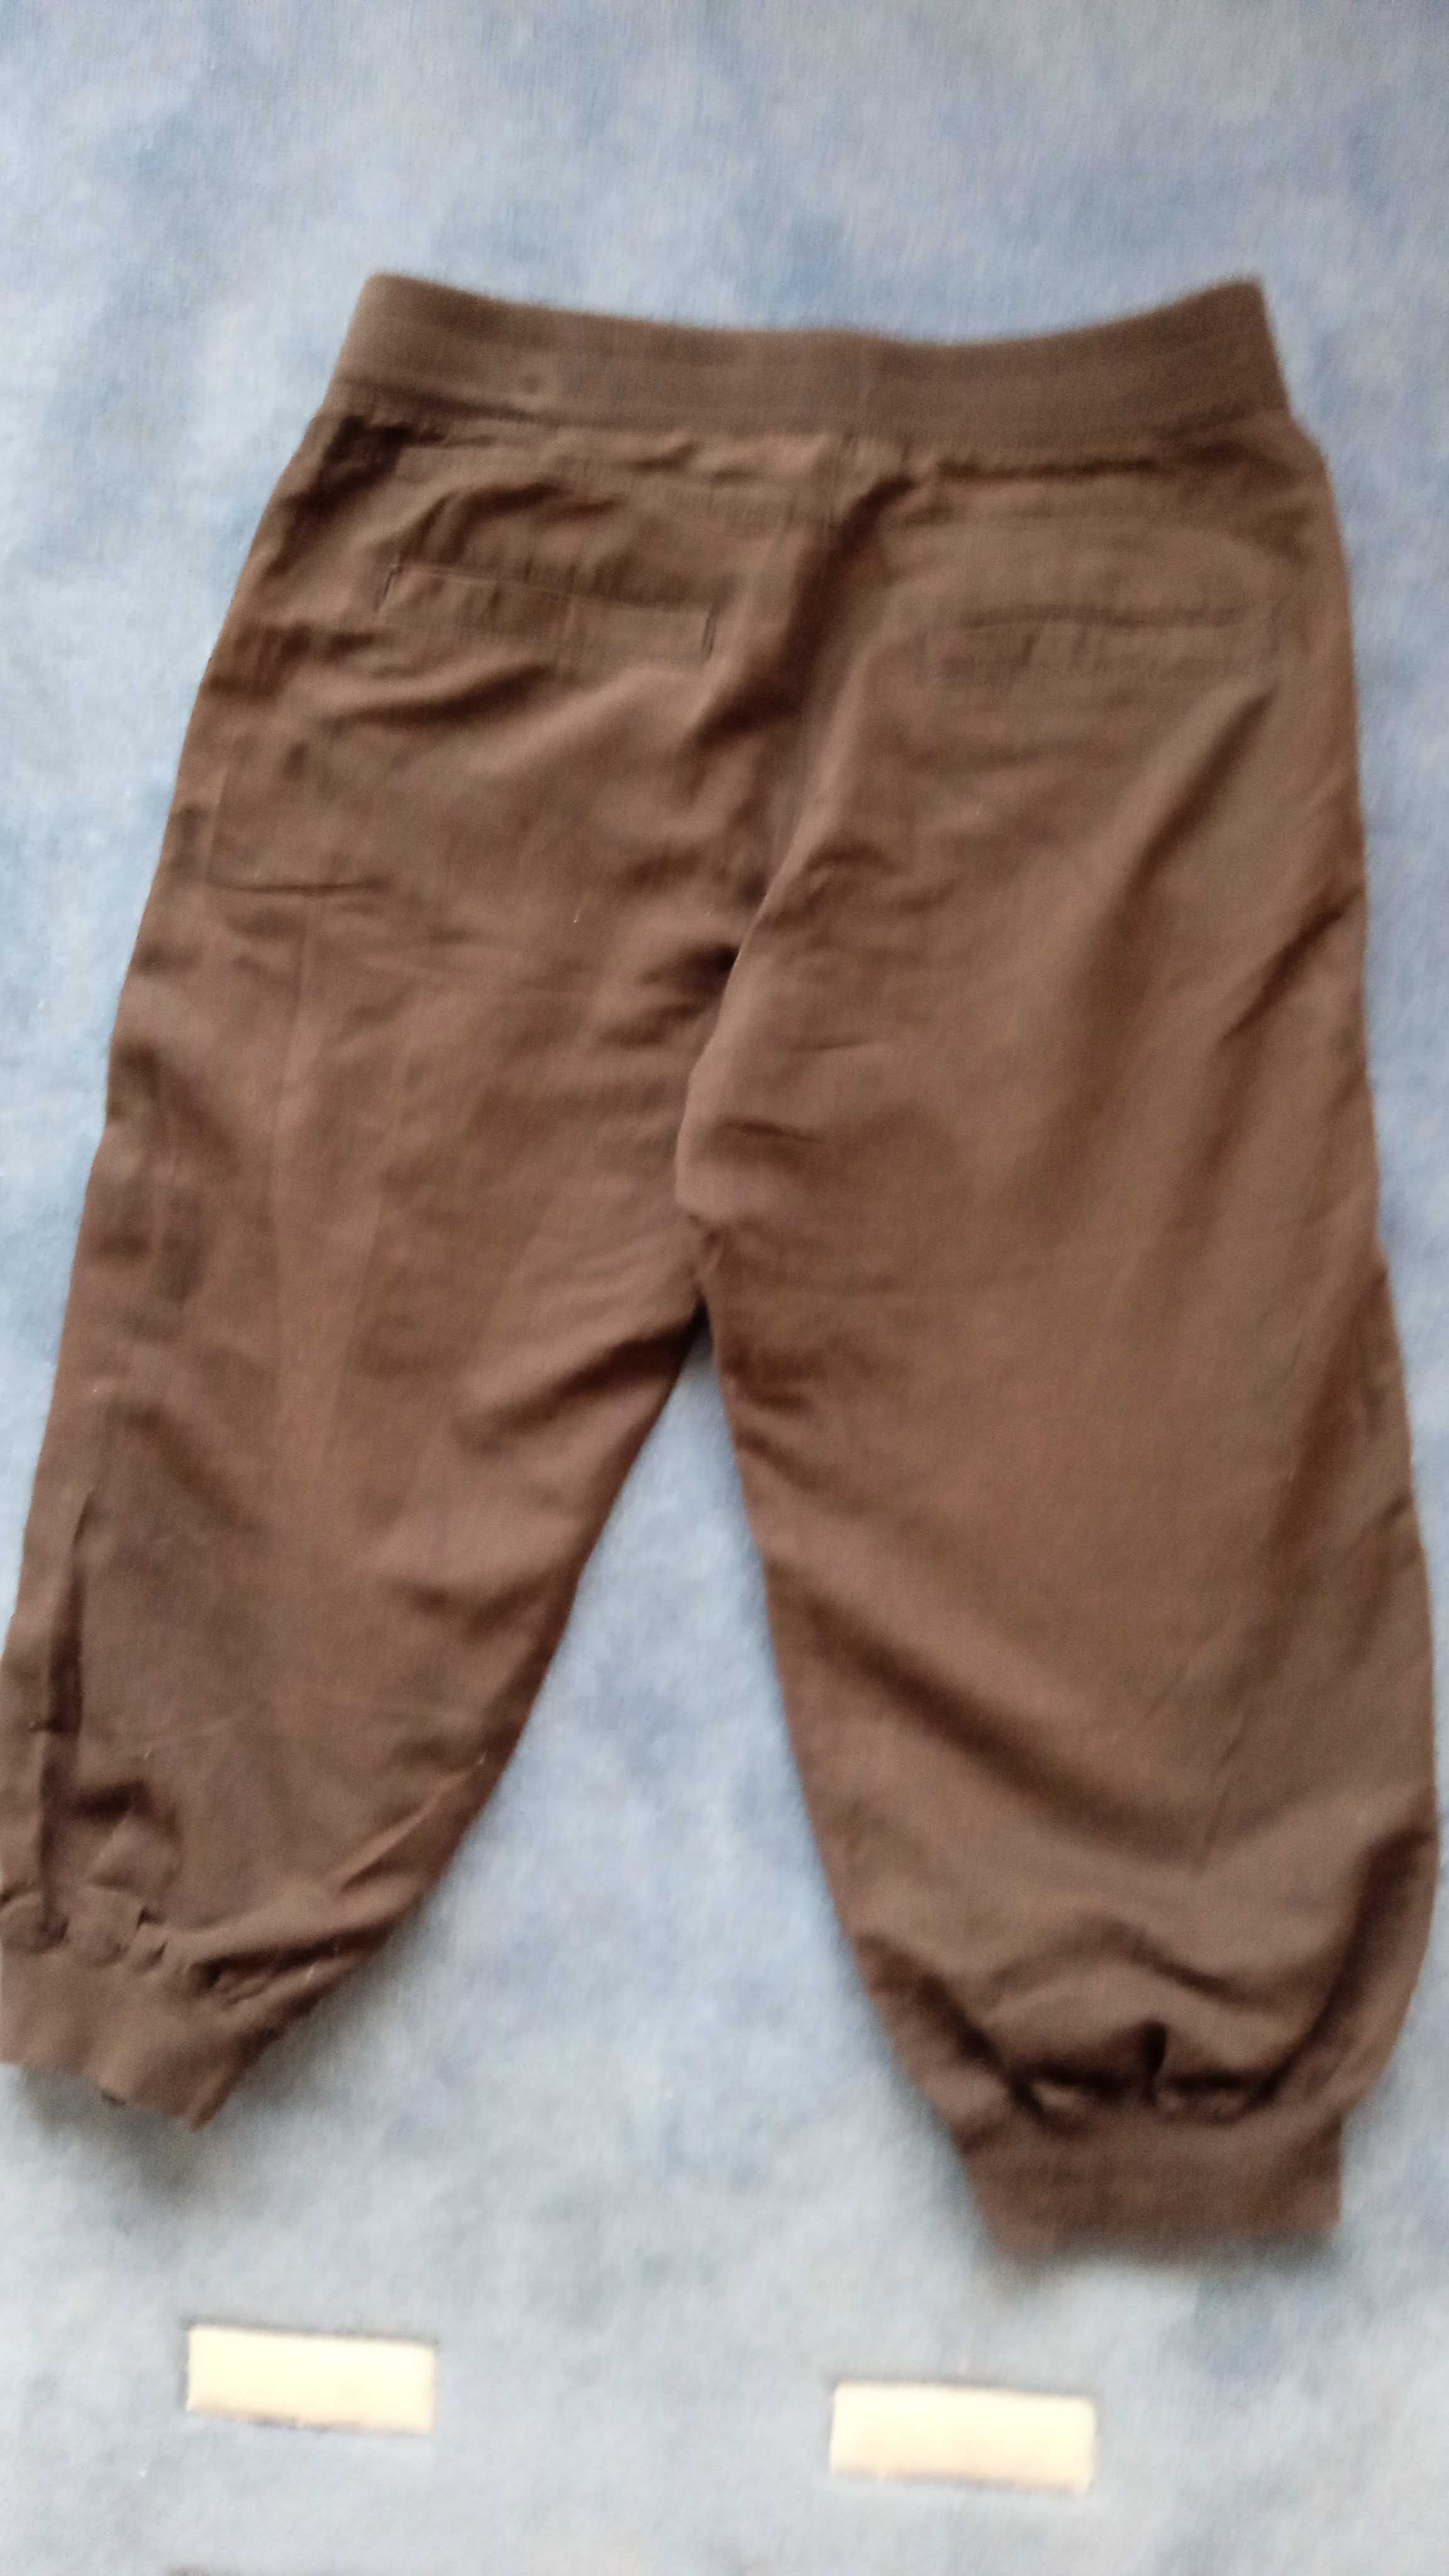 Spodnie  damskie, krótkie, brązowe, H & M, rozmiar 38.